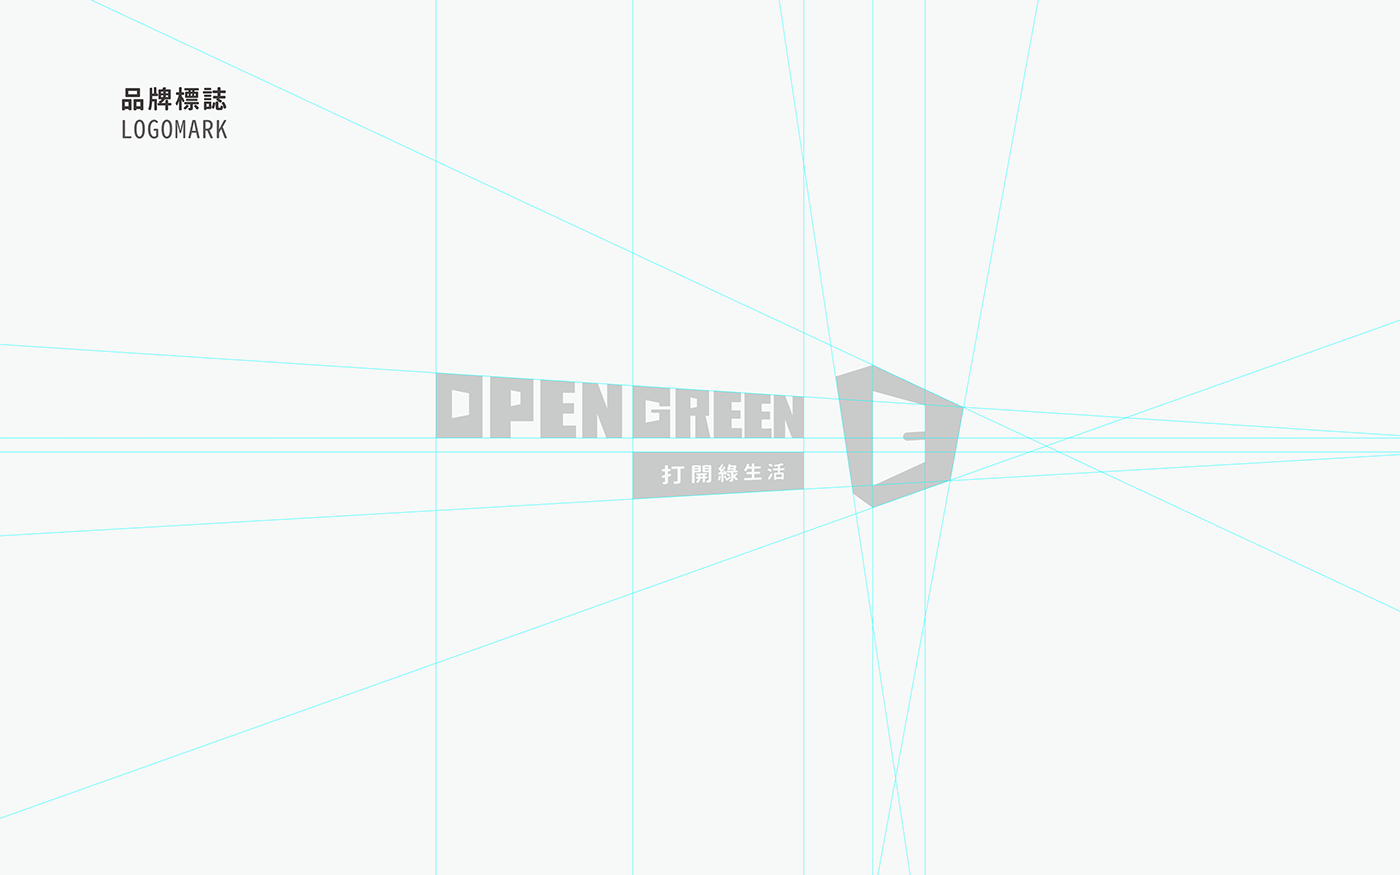 graphicdesign branddesign taiwan opengreen blinkdesign лого 戶外產品 ヤングミコ